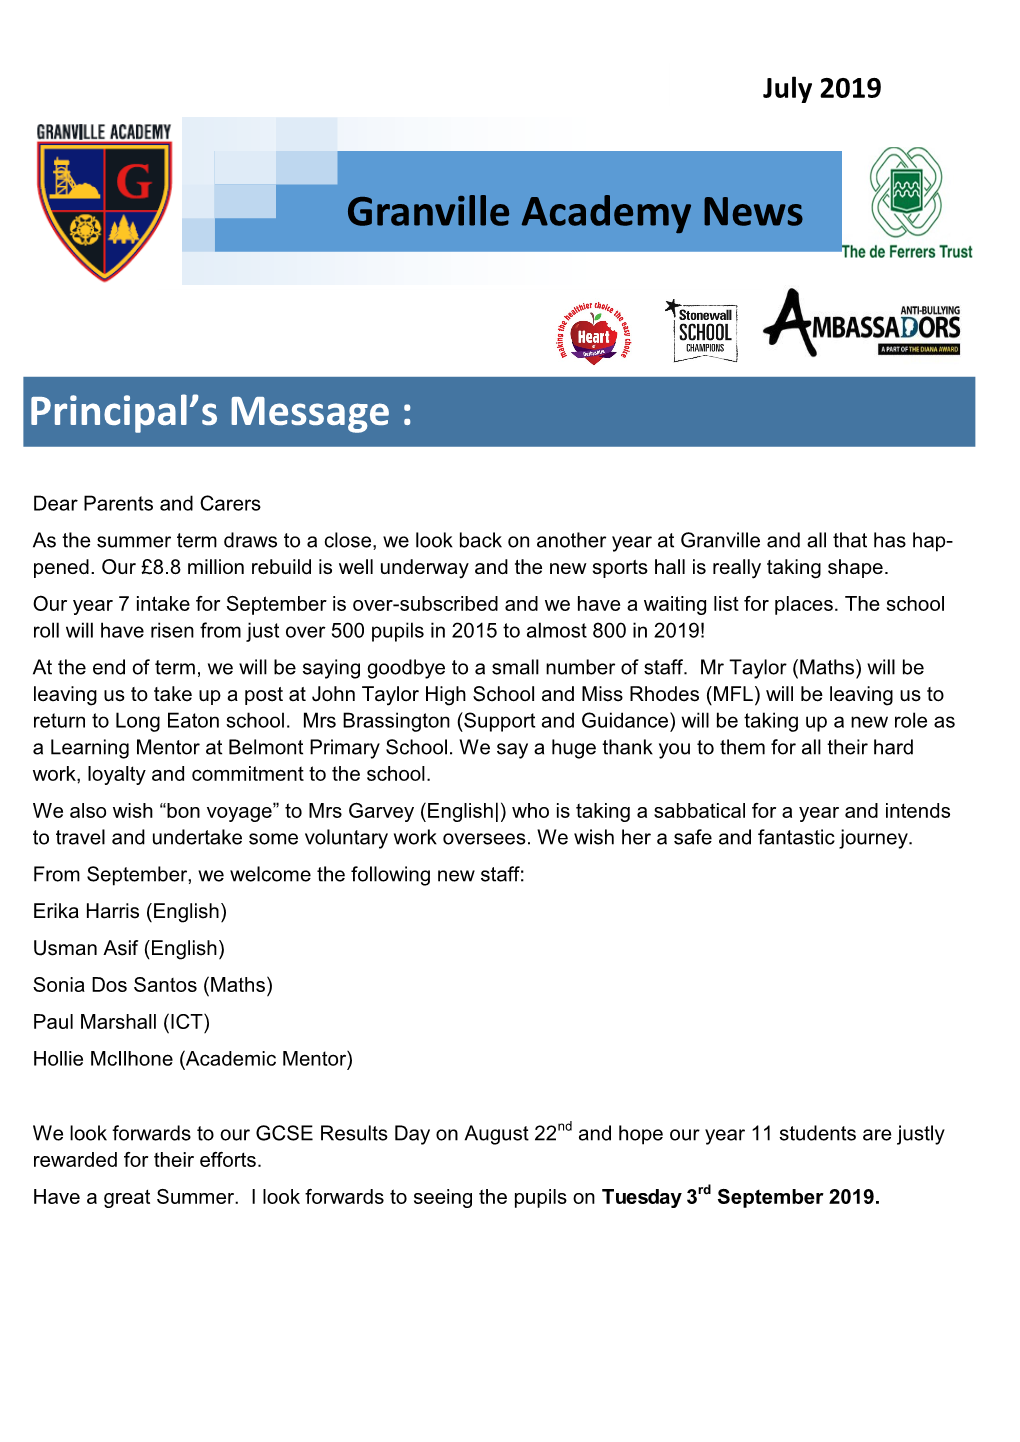 Granville Academy News Principal's Message